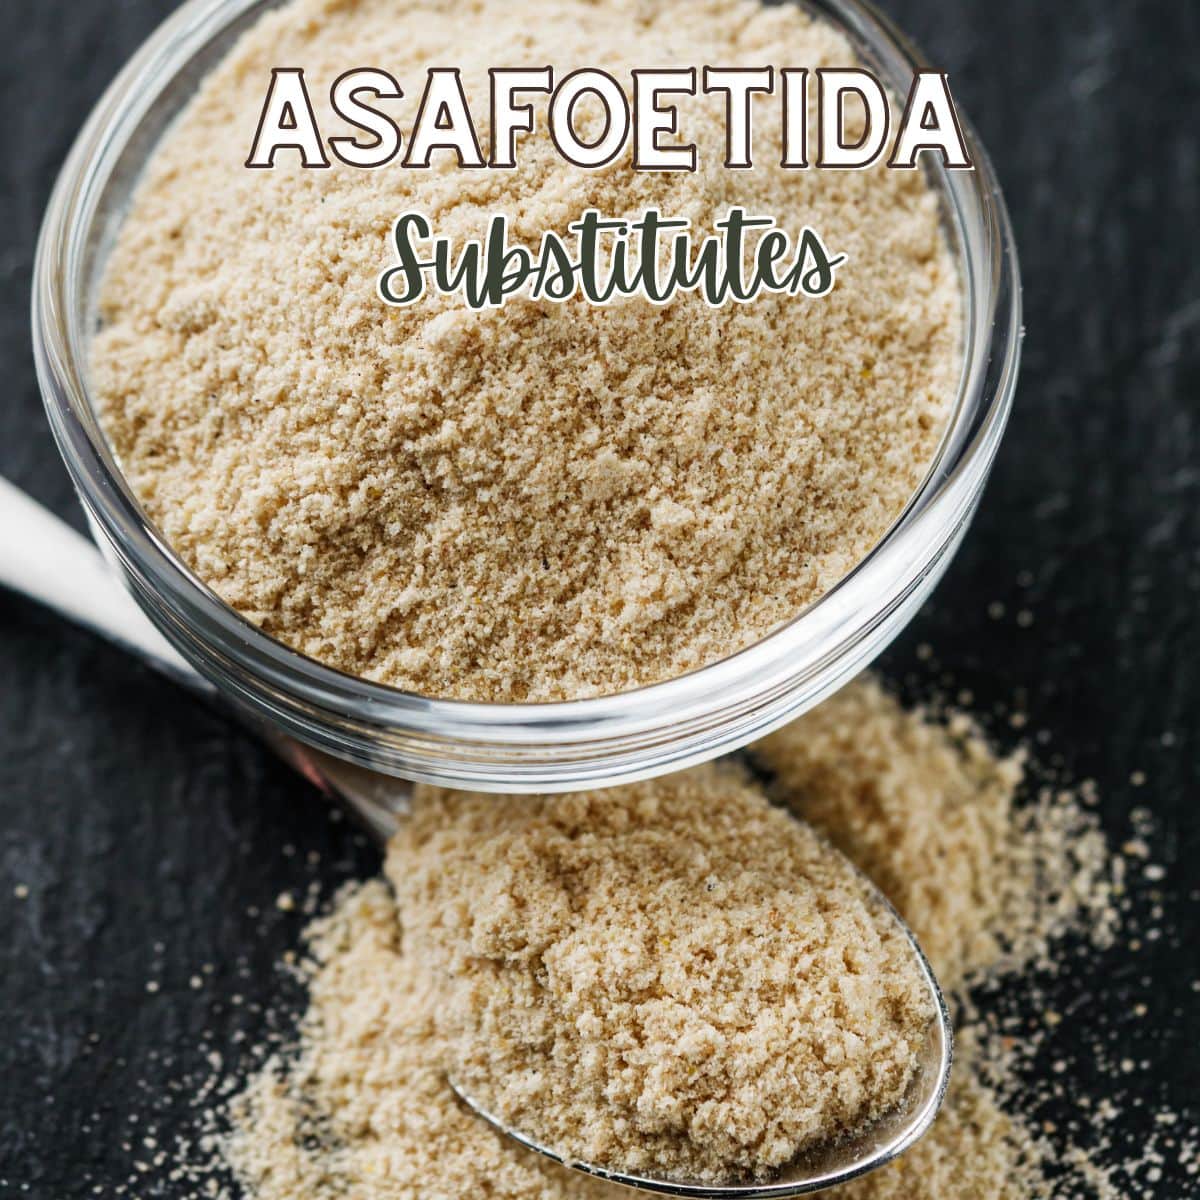 Substitutes for Asafoetida (Hing)